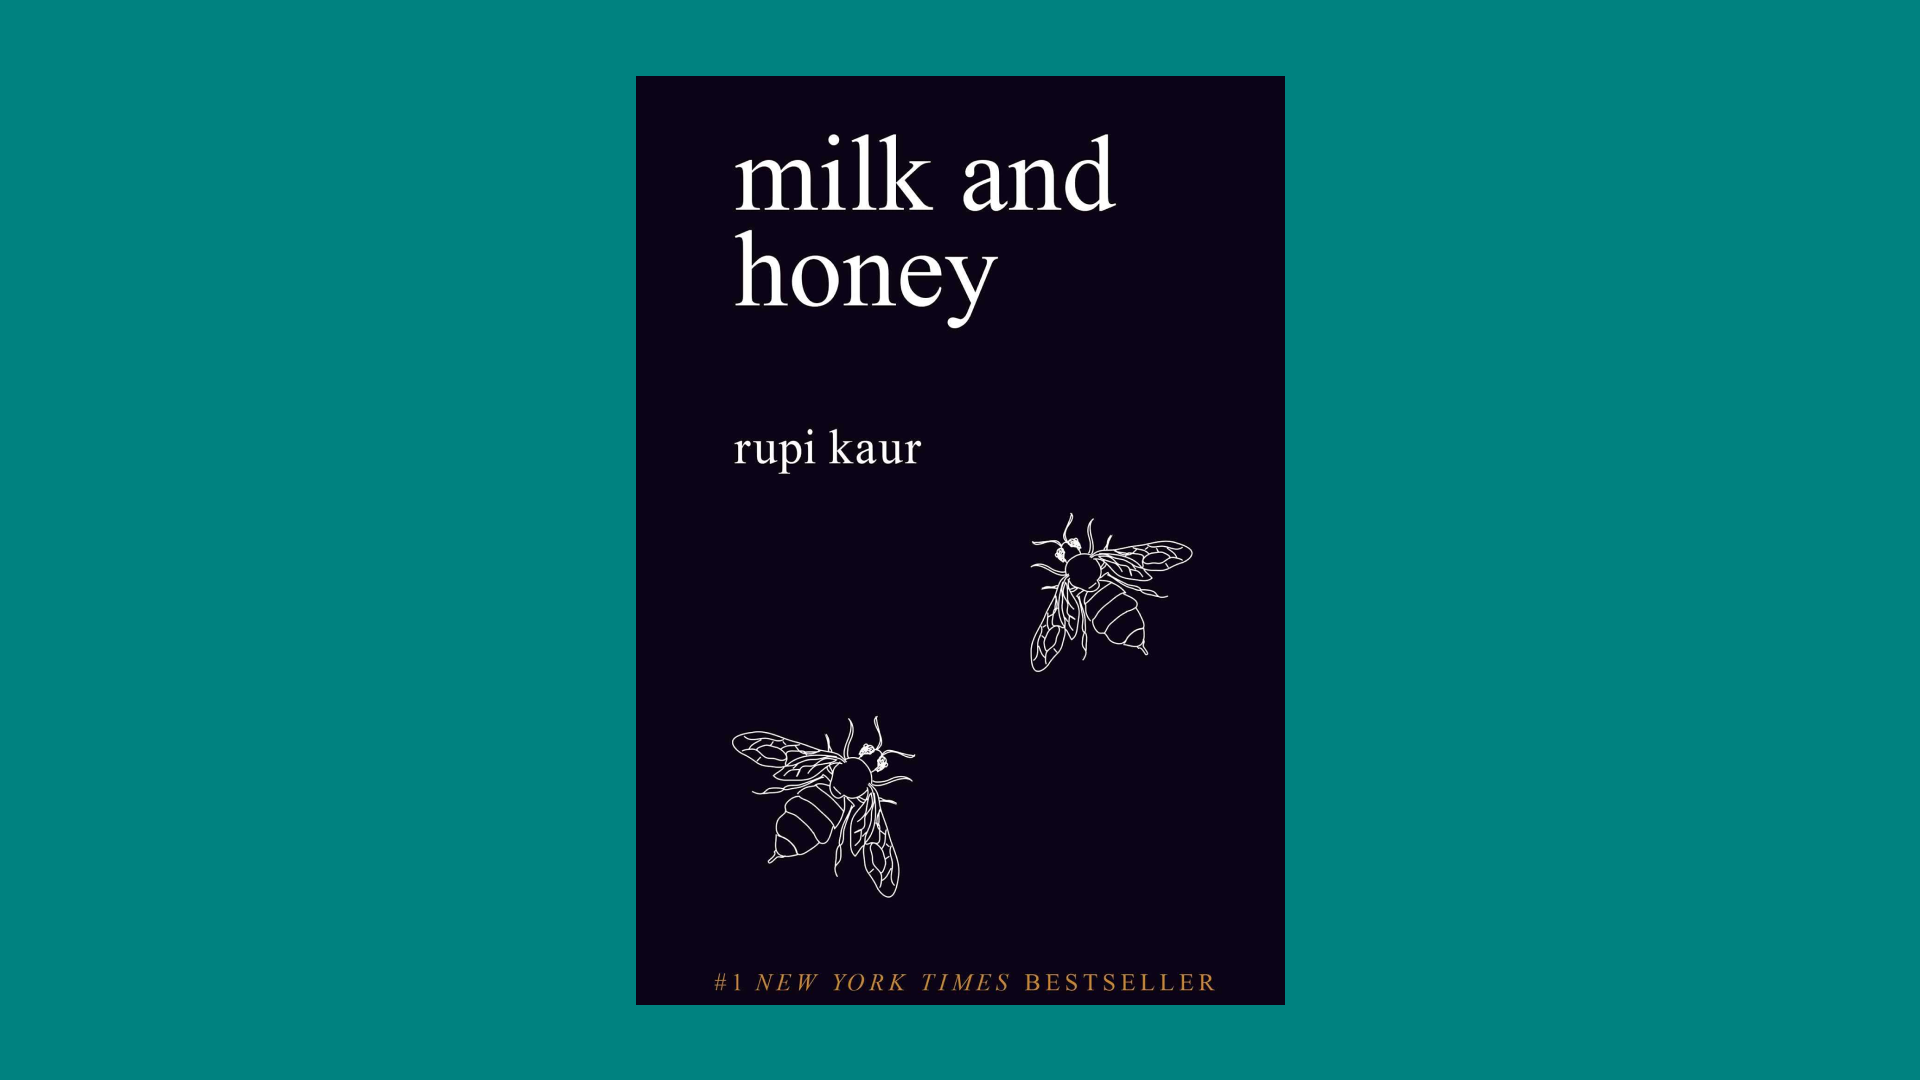 “Milk and Honey” by Rupi Kaur